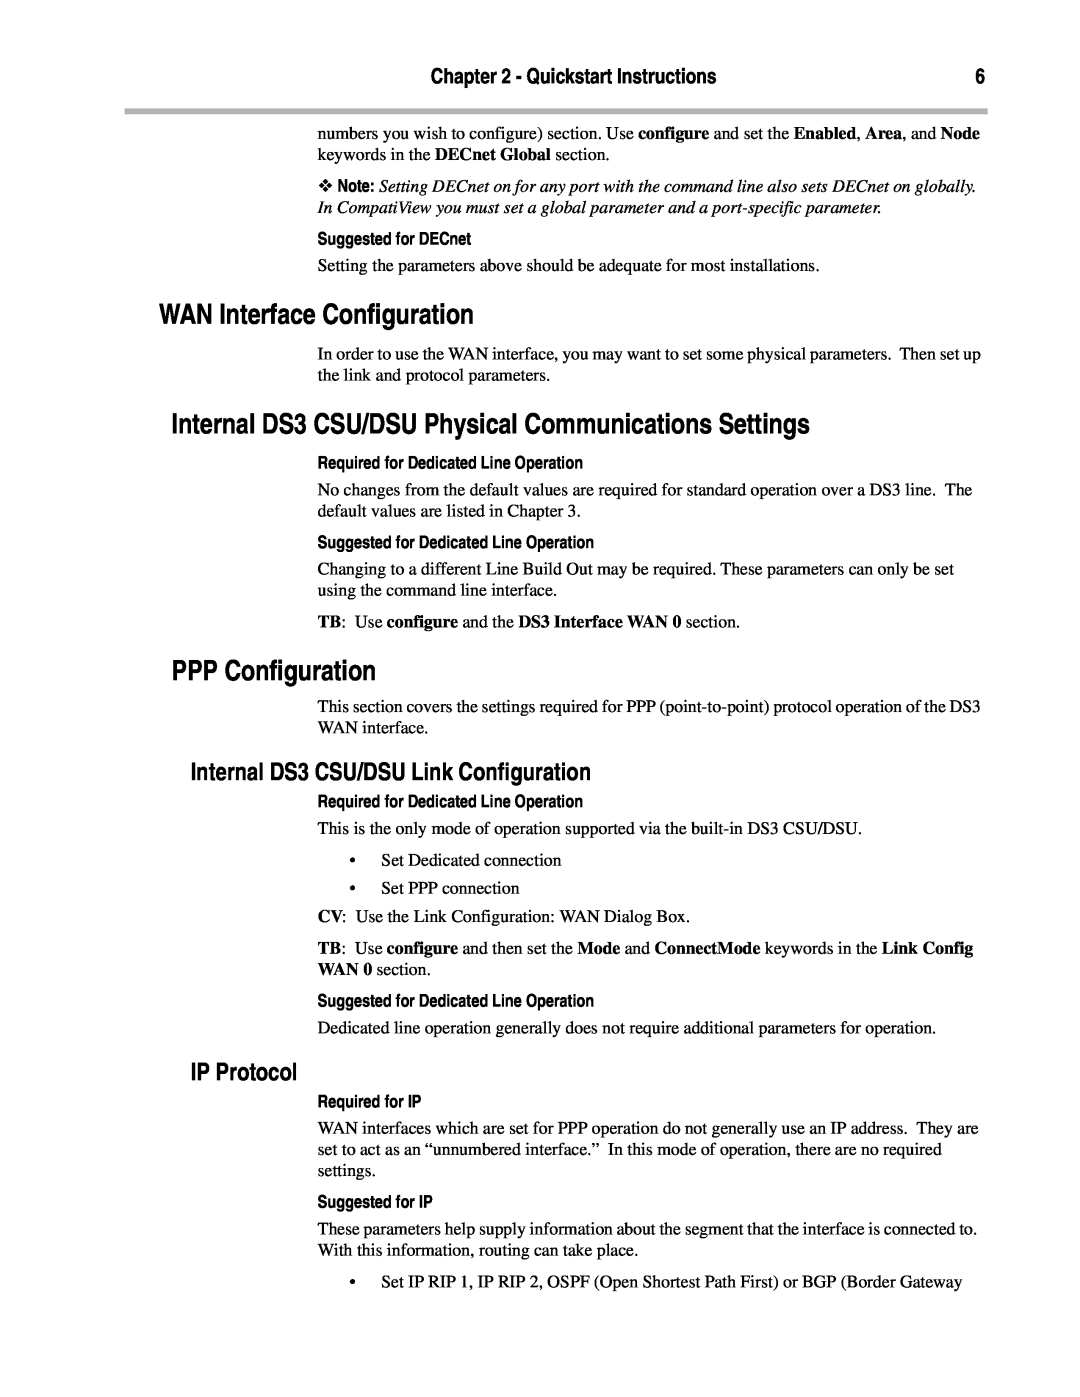 Compatible Systems WAN Interface Configuration, Internal DS3 CSU/DSU Physical Communications Settings, IP Protocol 